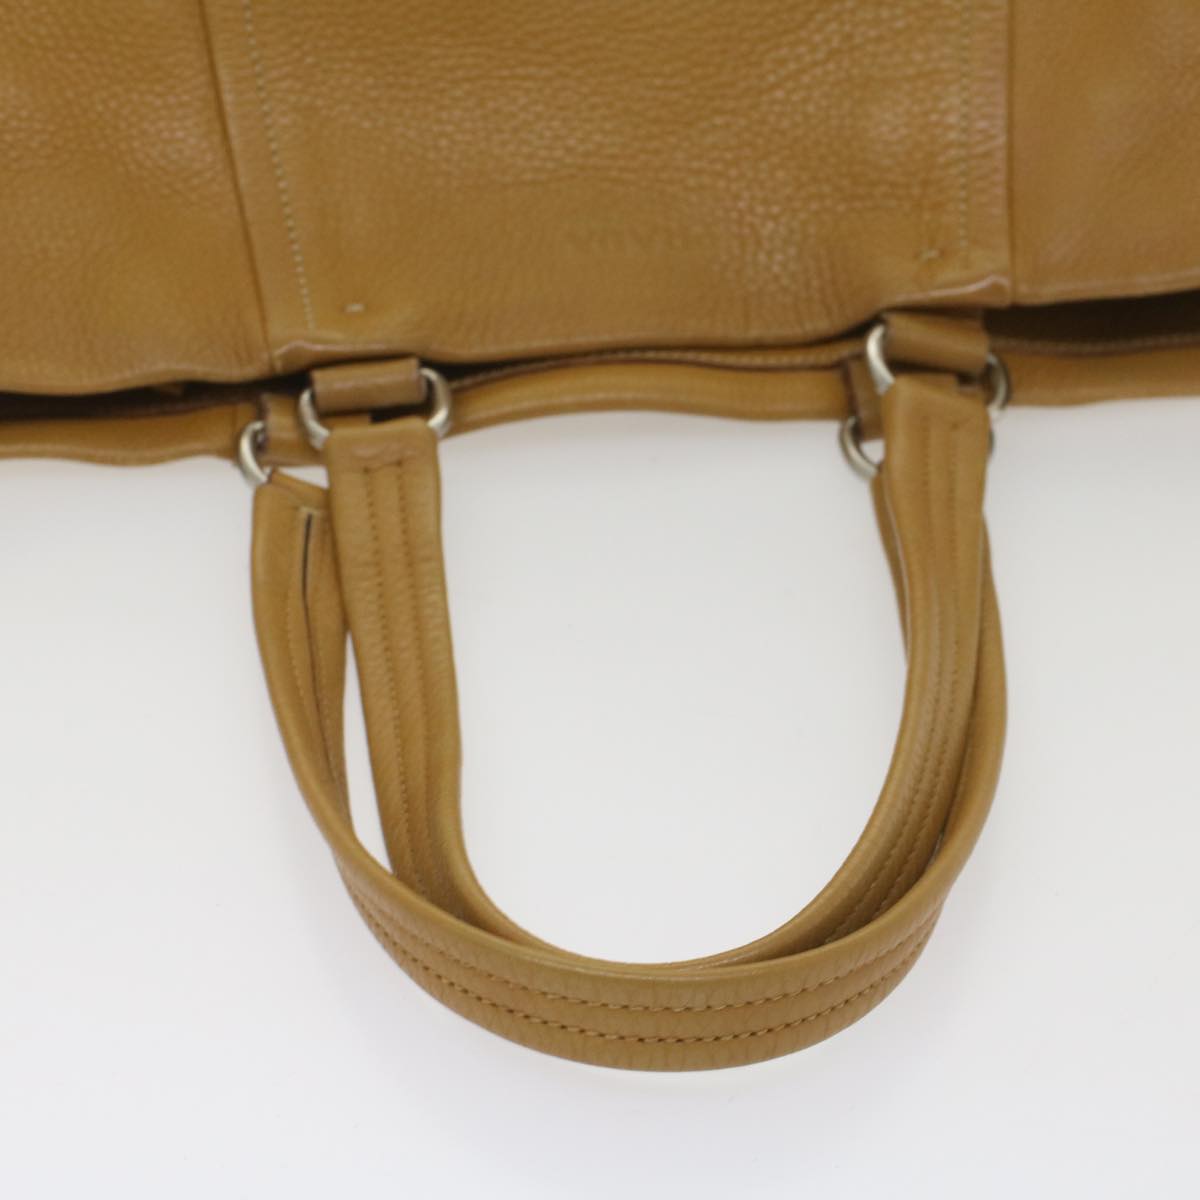 PRADA Tote Bag Leather Brown Auth bs8845